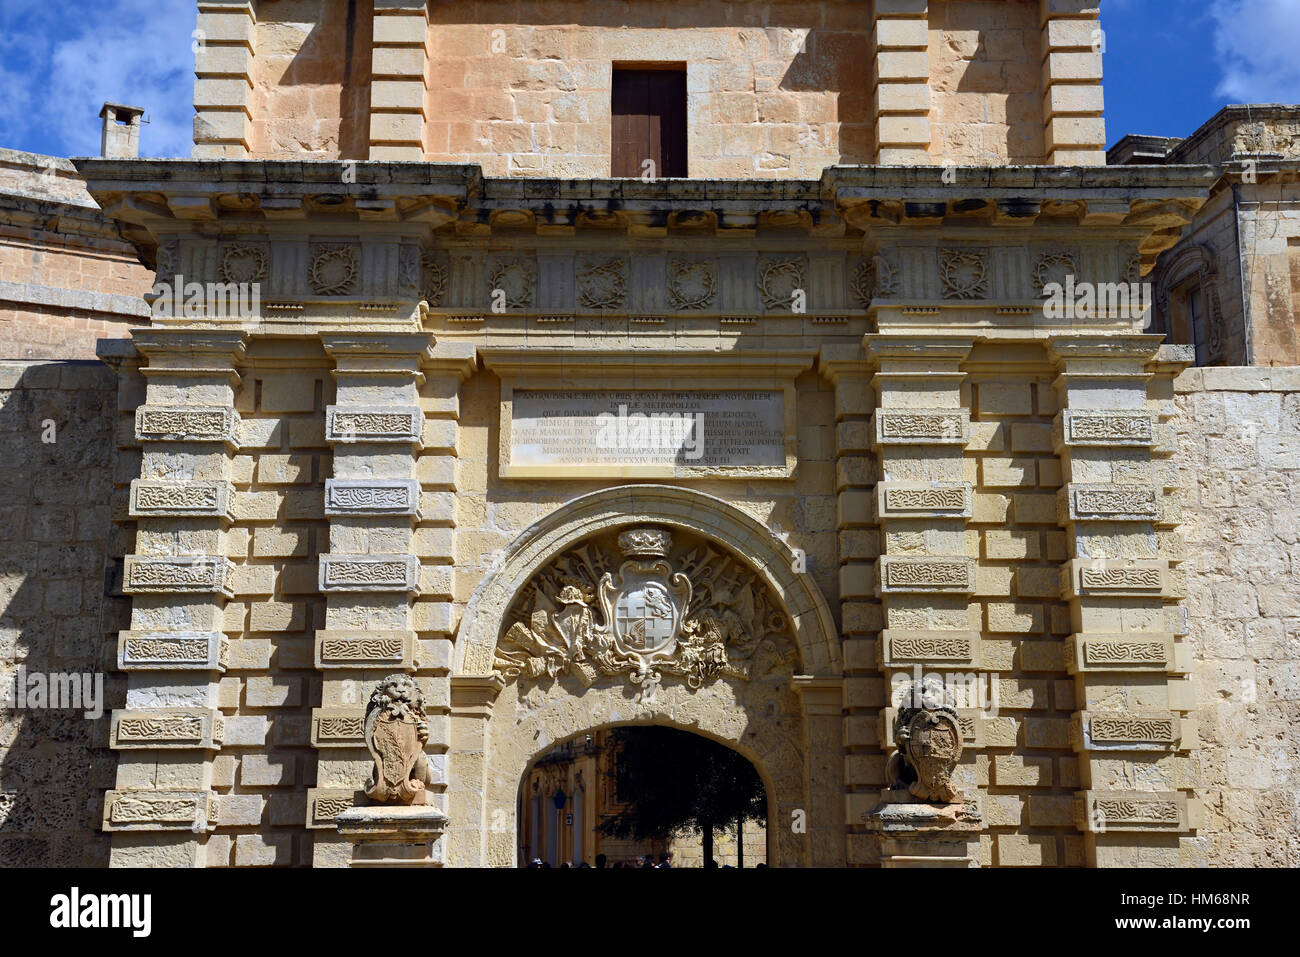 Mdina Malta Hauptstadt Silent Altstadt verzierten Tür Tür Stein geschnitzt walled Zitadelle Weltkulturerbe RM Welt Città Vecchia Città Stockfoto